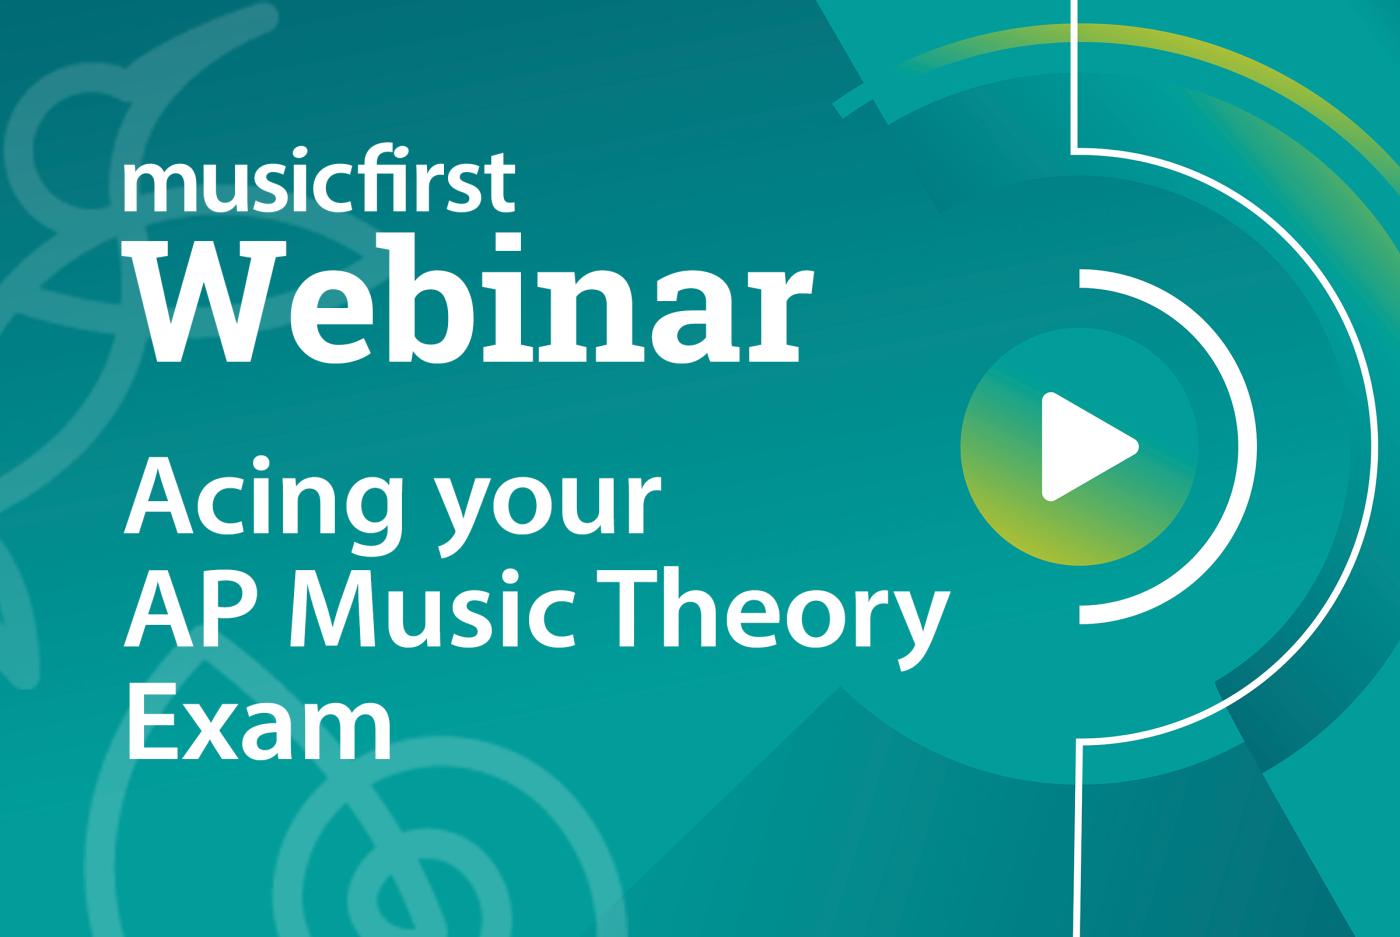 MusicFirst Webinar: Acing Your AP Music Theory Exam